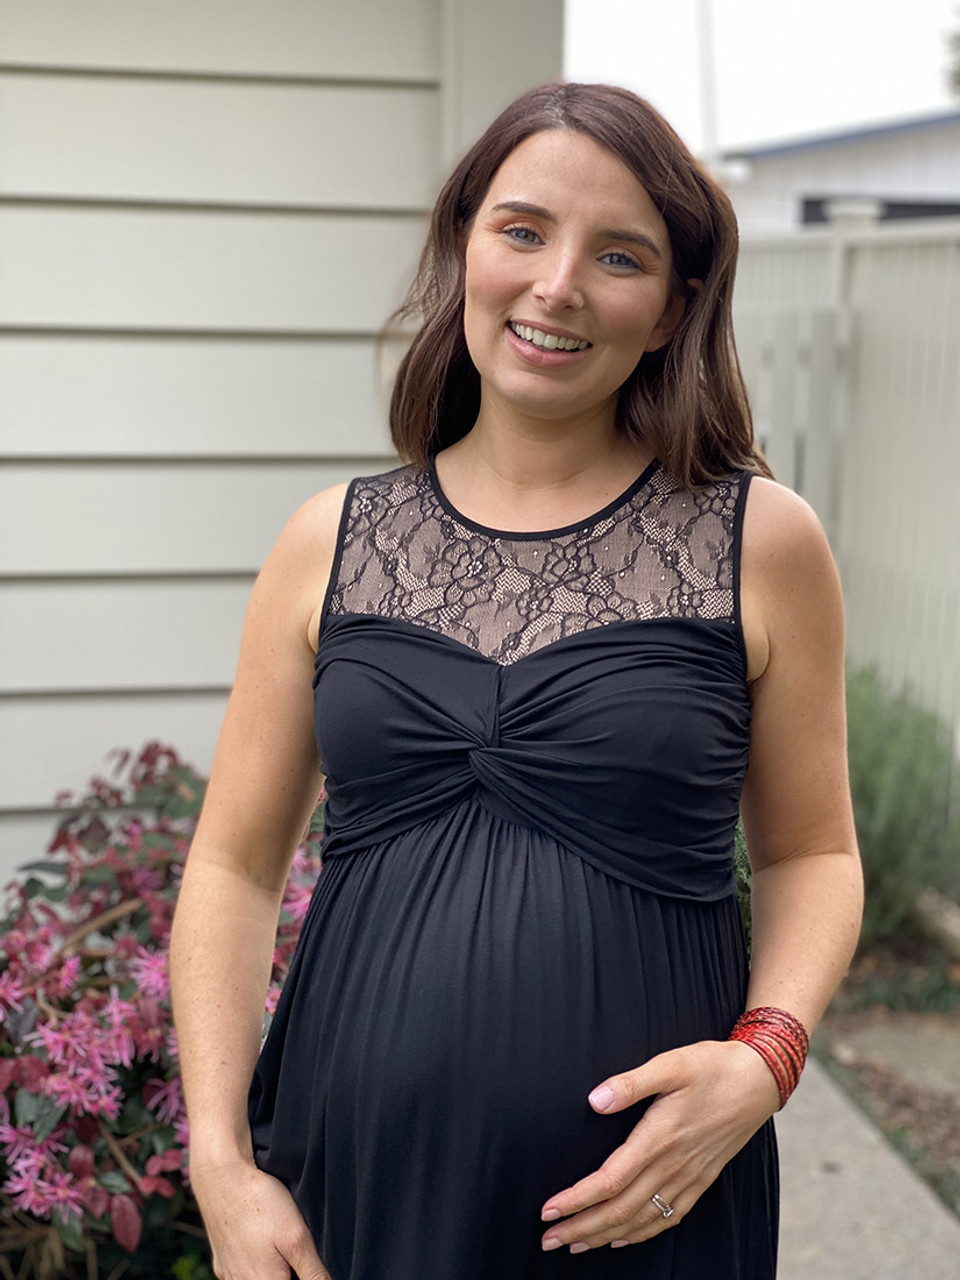 Breastmates - Black Cotton Tank Dress - Maternity clothing online at  Breastmates